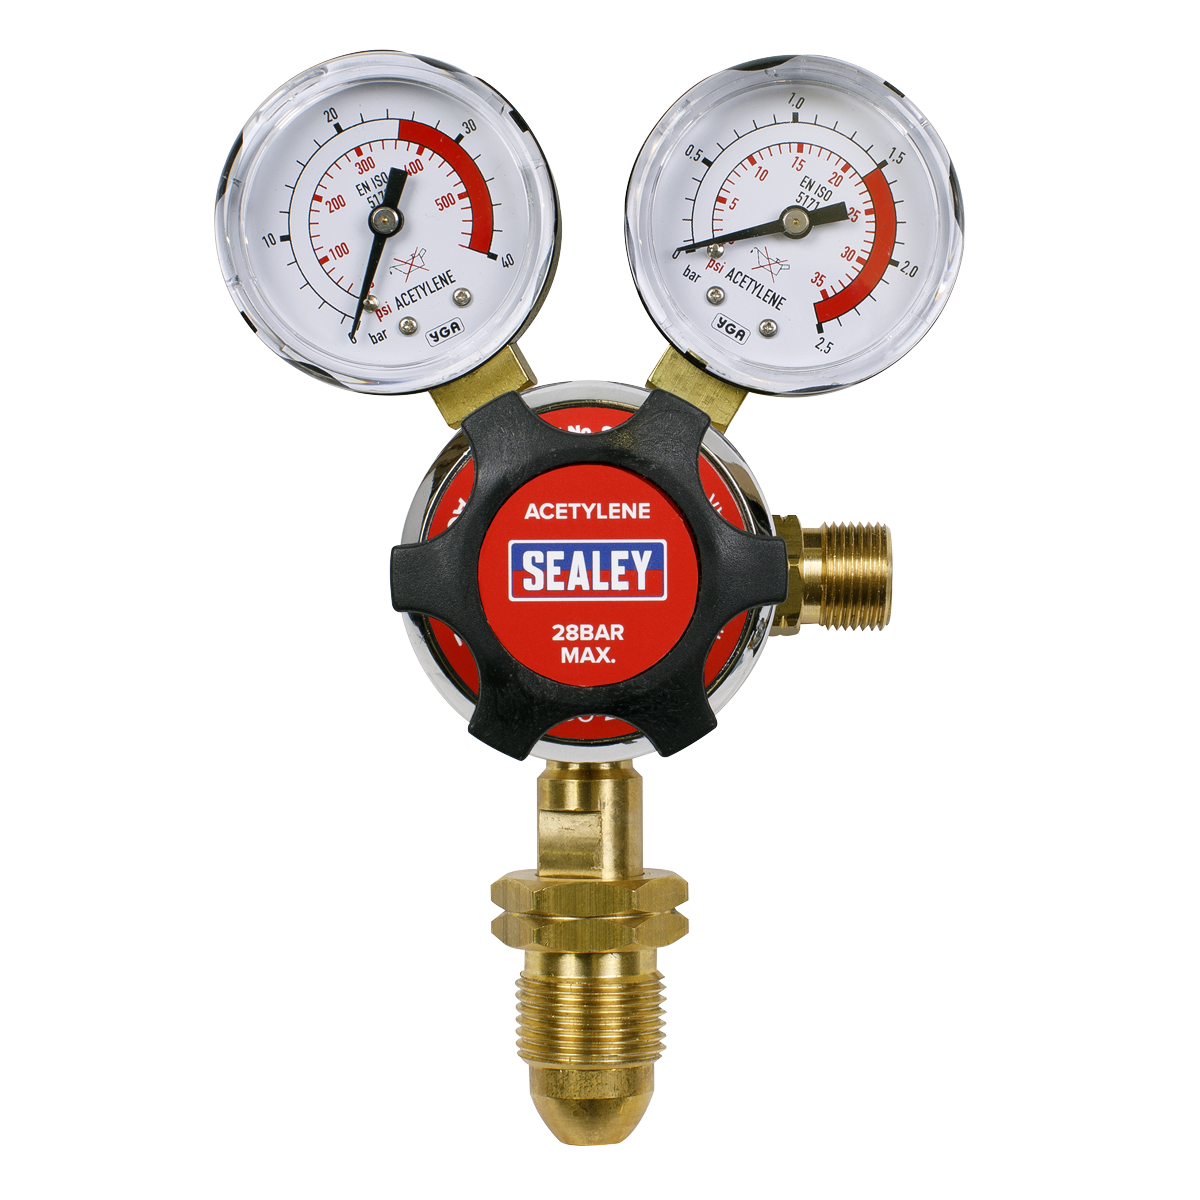 Sealey SGA40 Acetylene Regulator